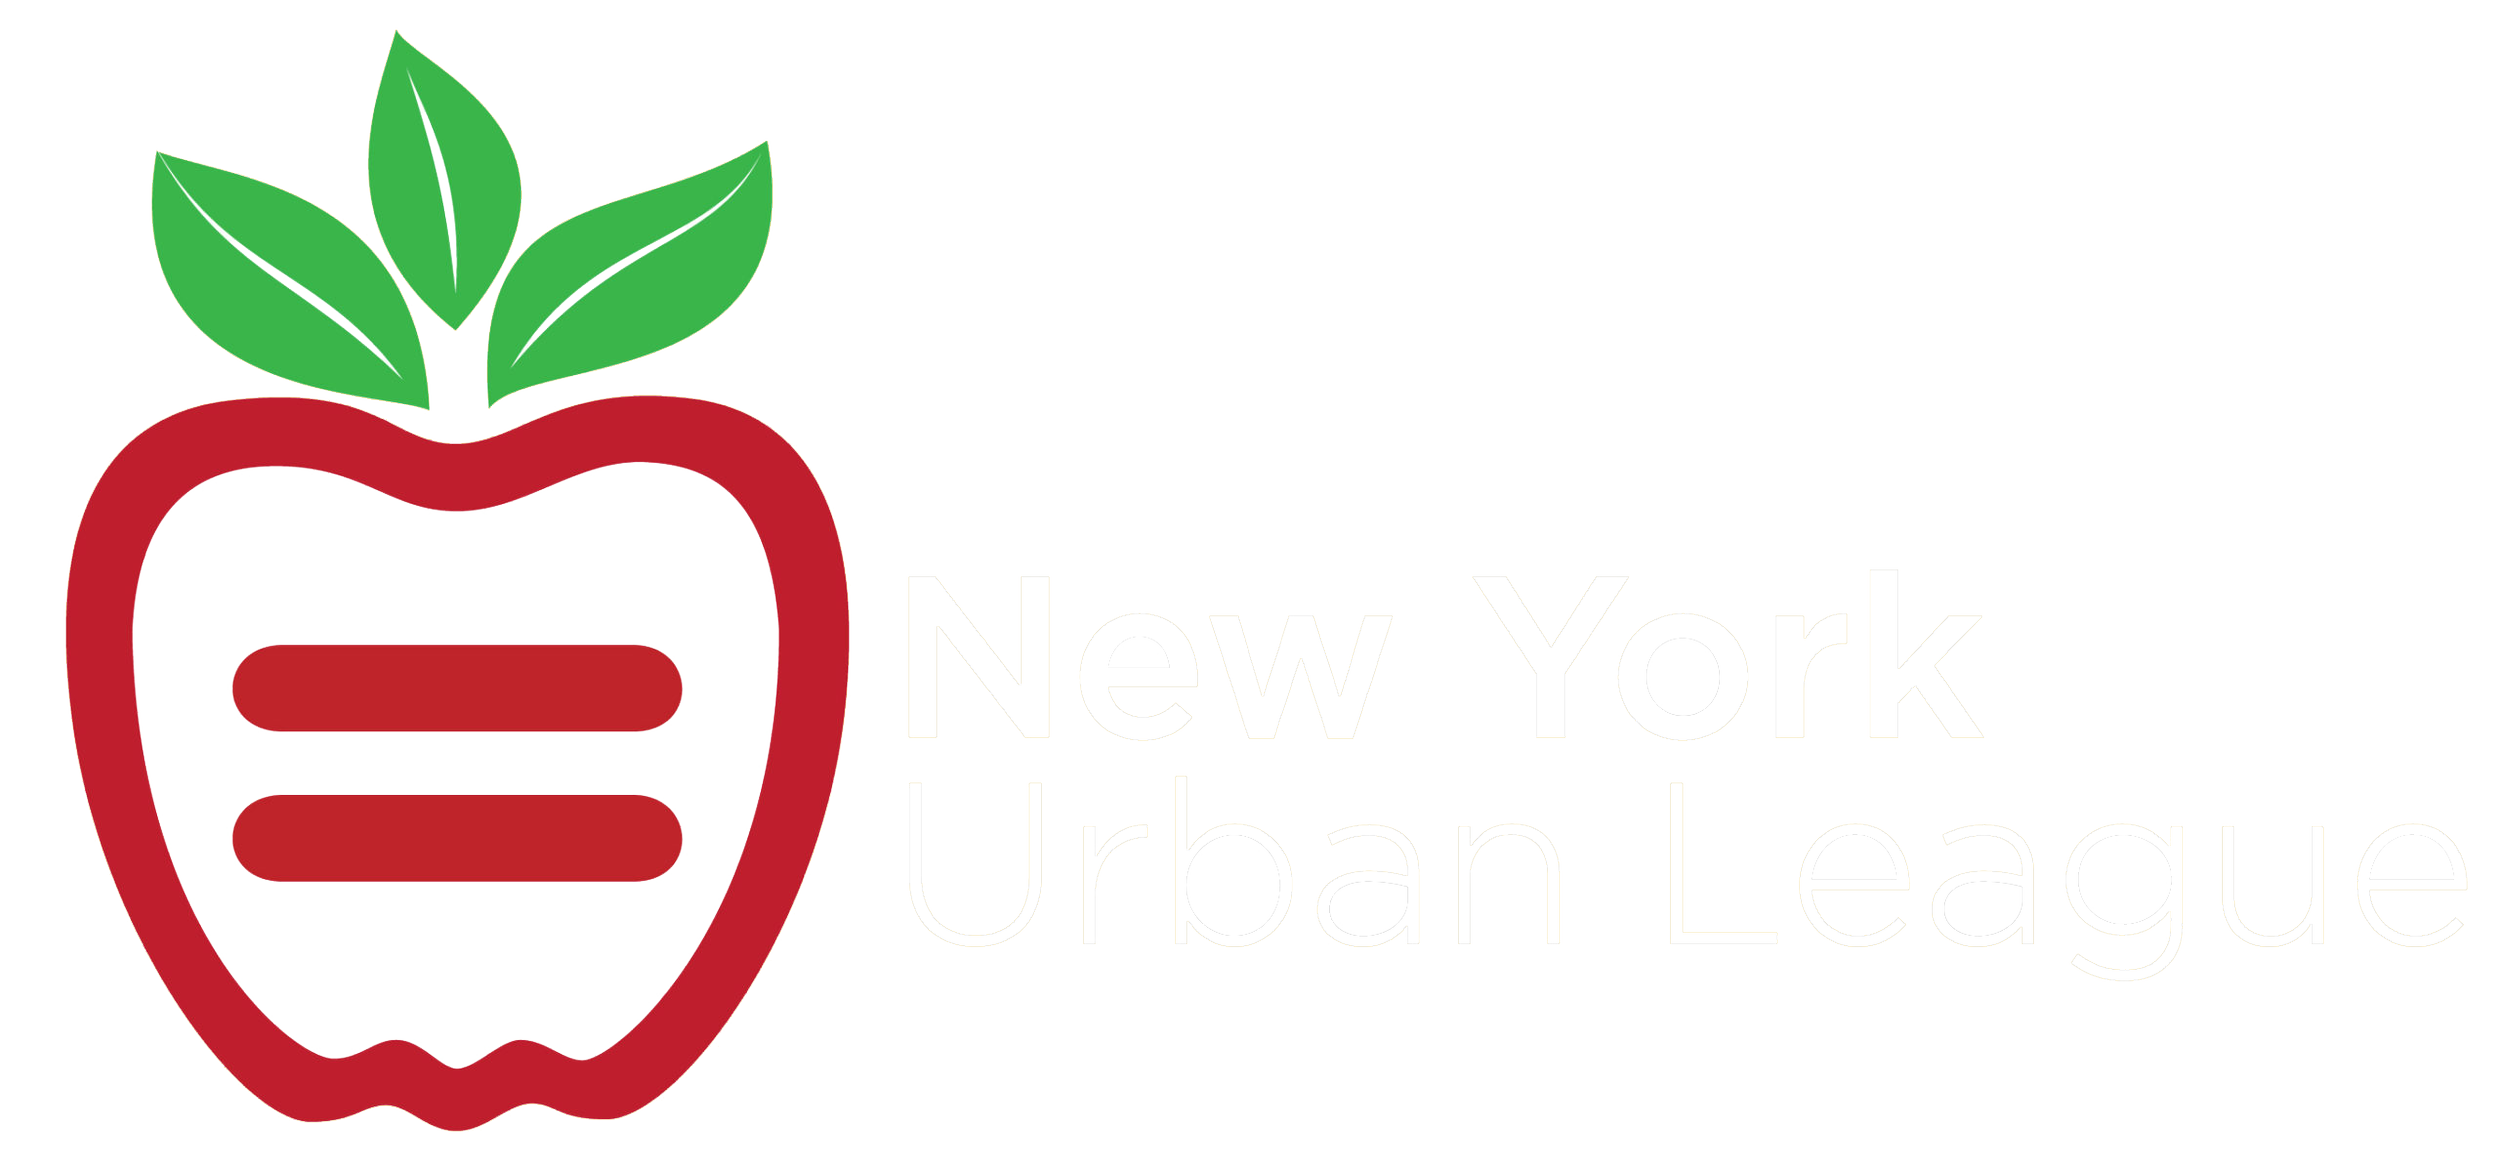 New-York-Urban-League-wht.png